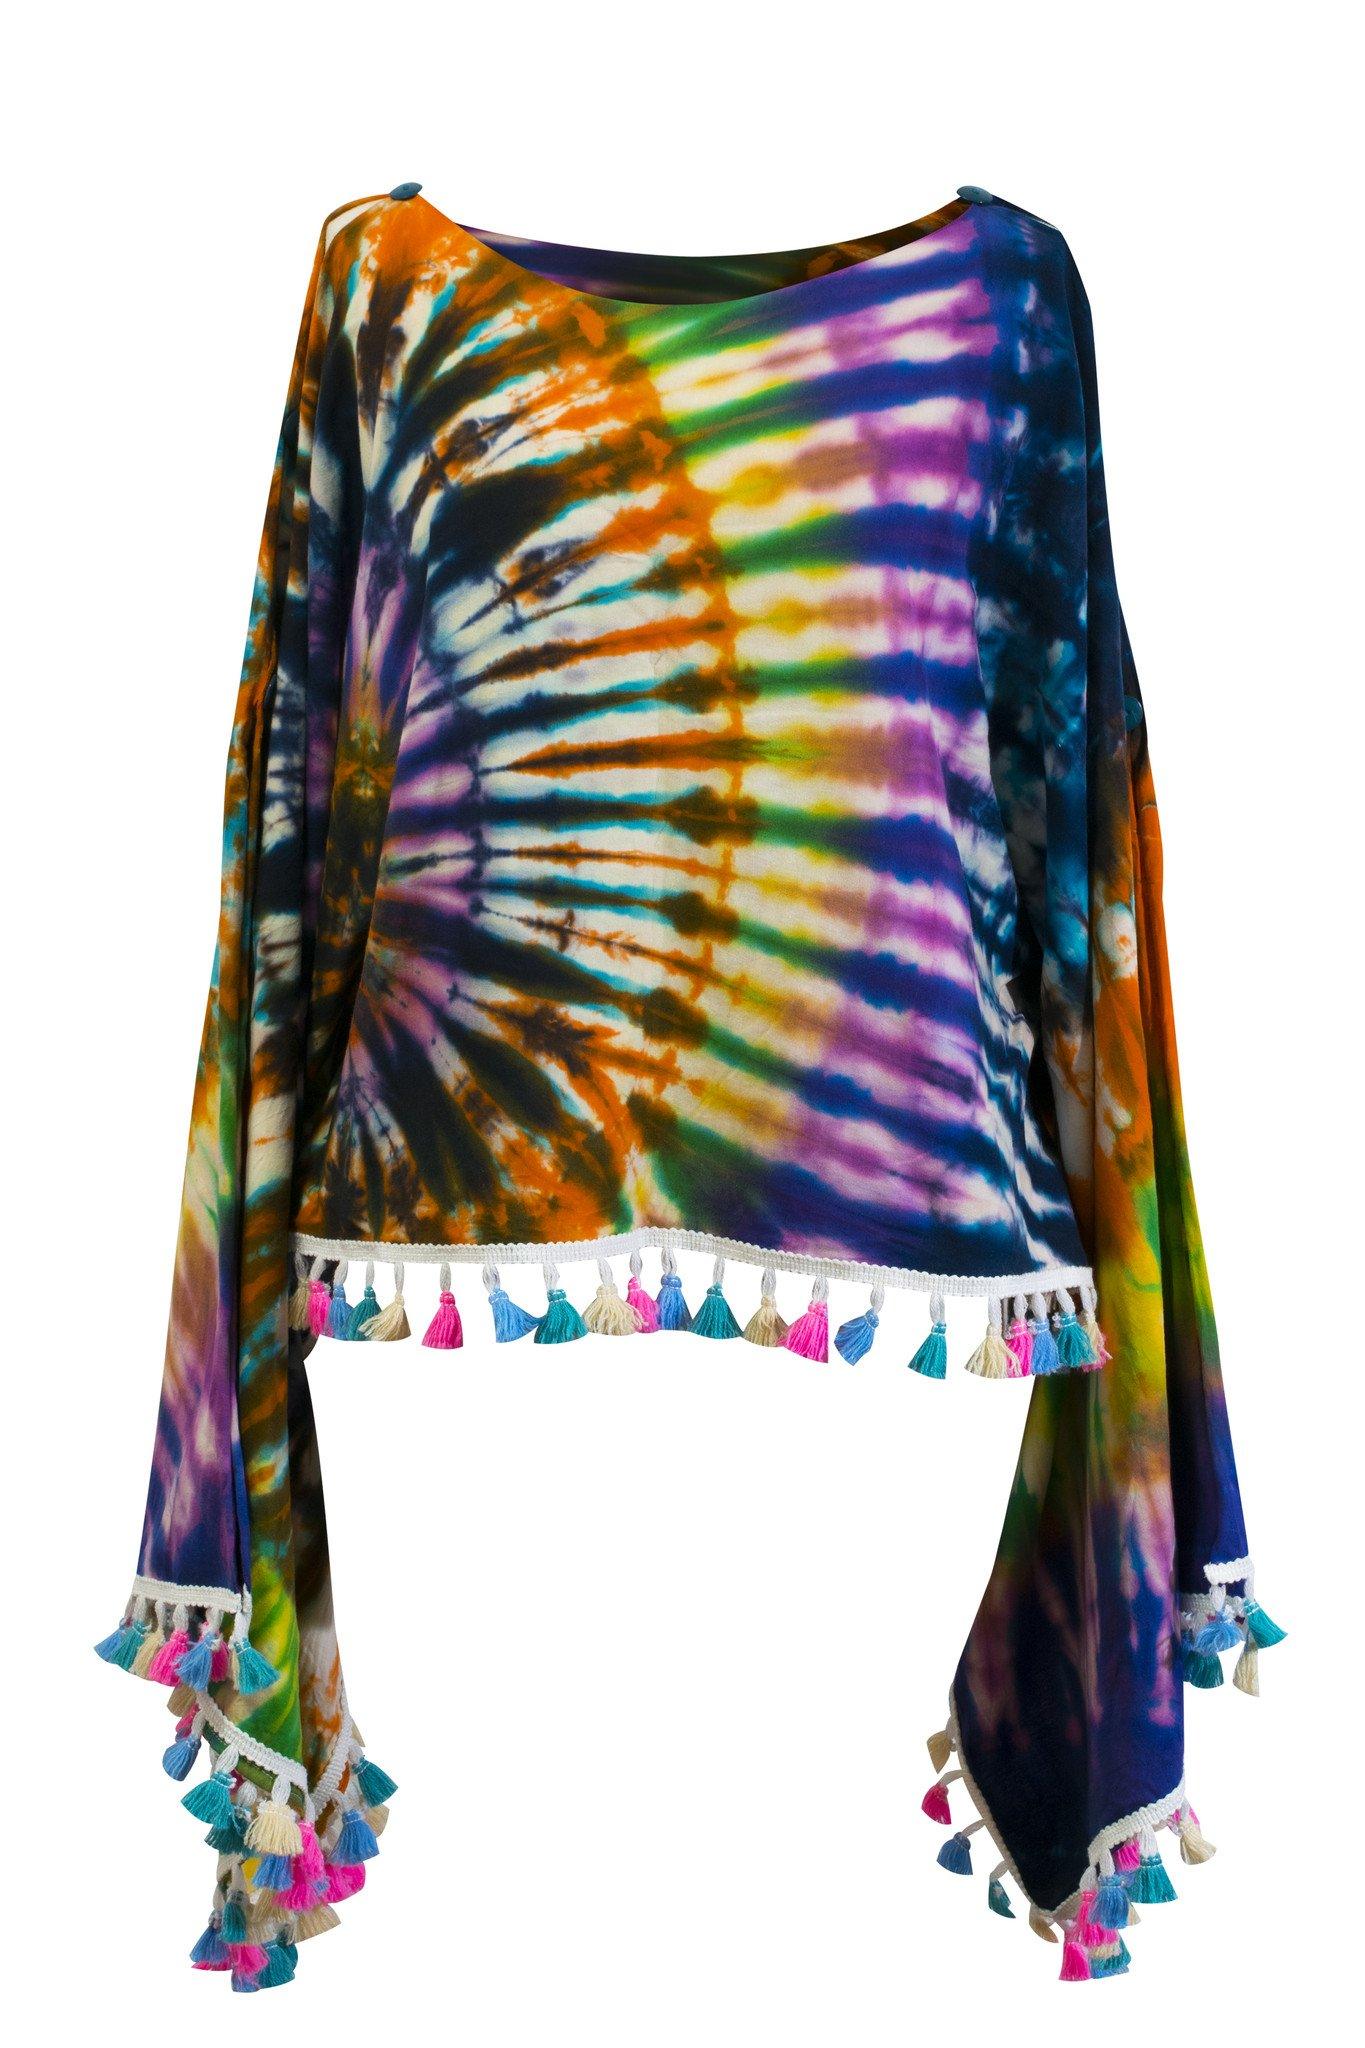 Tie dye Groovy Colors 2in1 Poncho Wrap Shawl Bohemian hippie festival beachwear - CCCollections